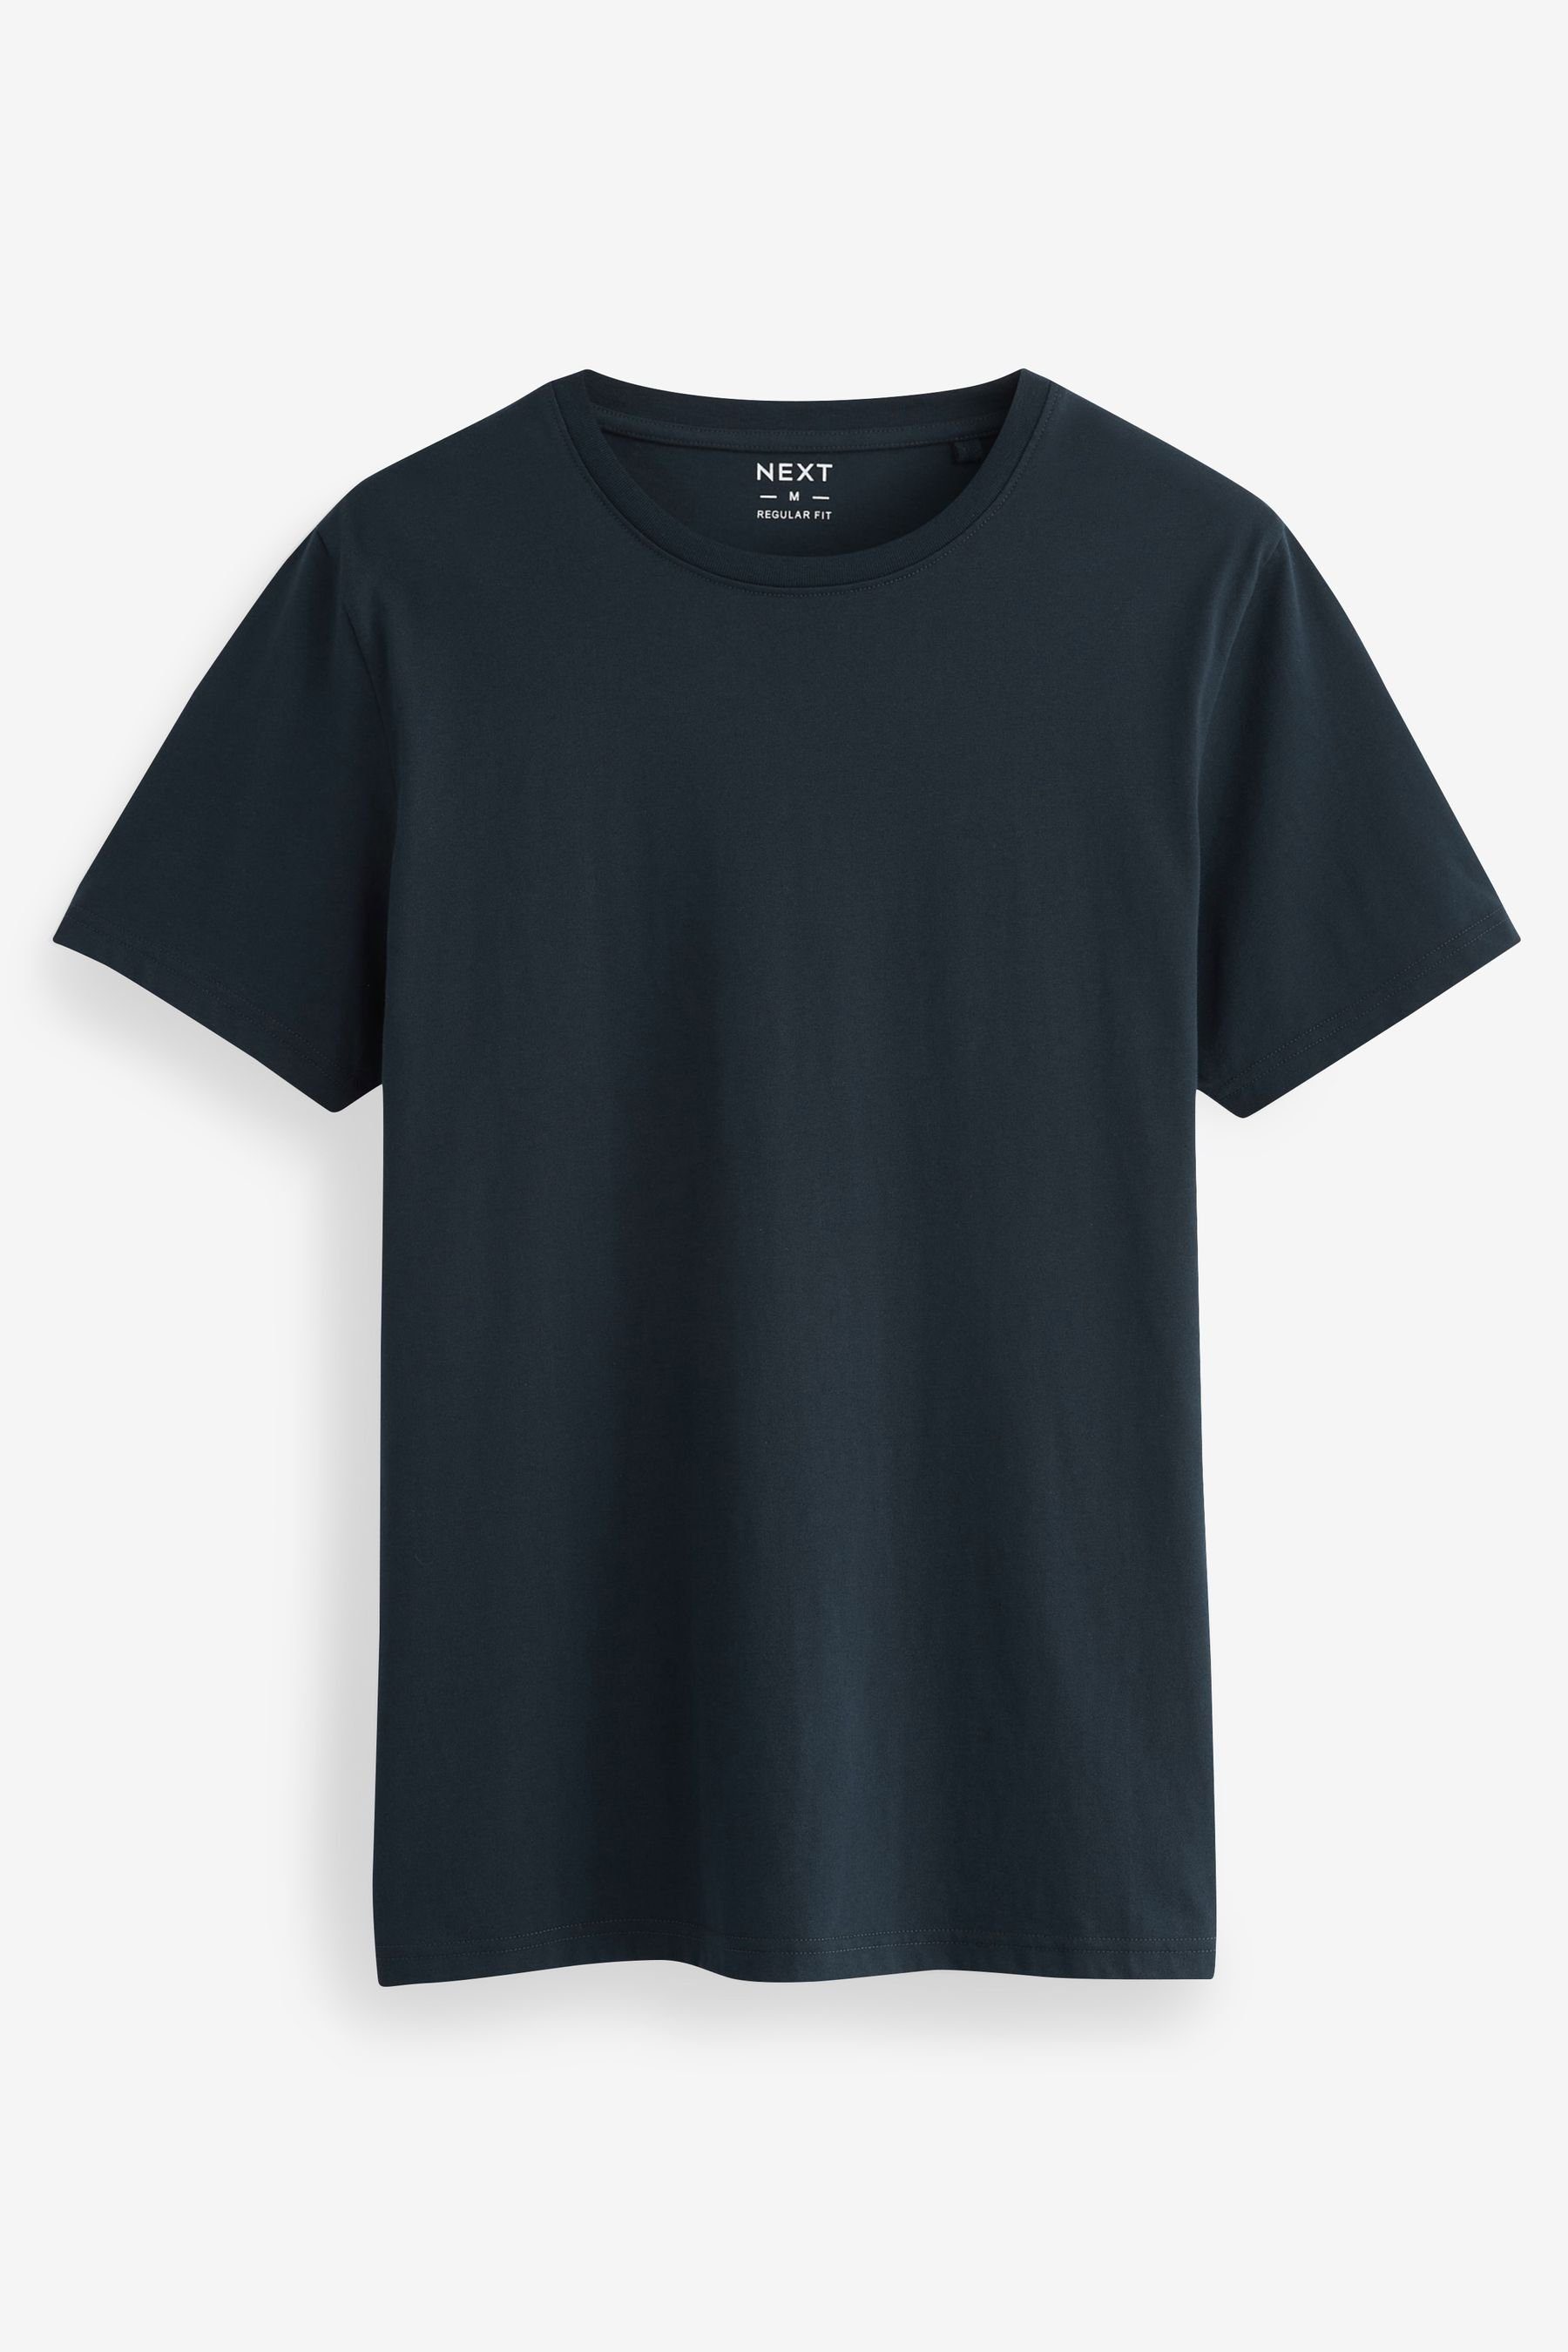 (6-tlg) Burgundy Green/ 6er-Pack Teal/ Navy/ White/ Next T-Shirts T-Shirt Black/